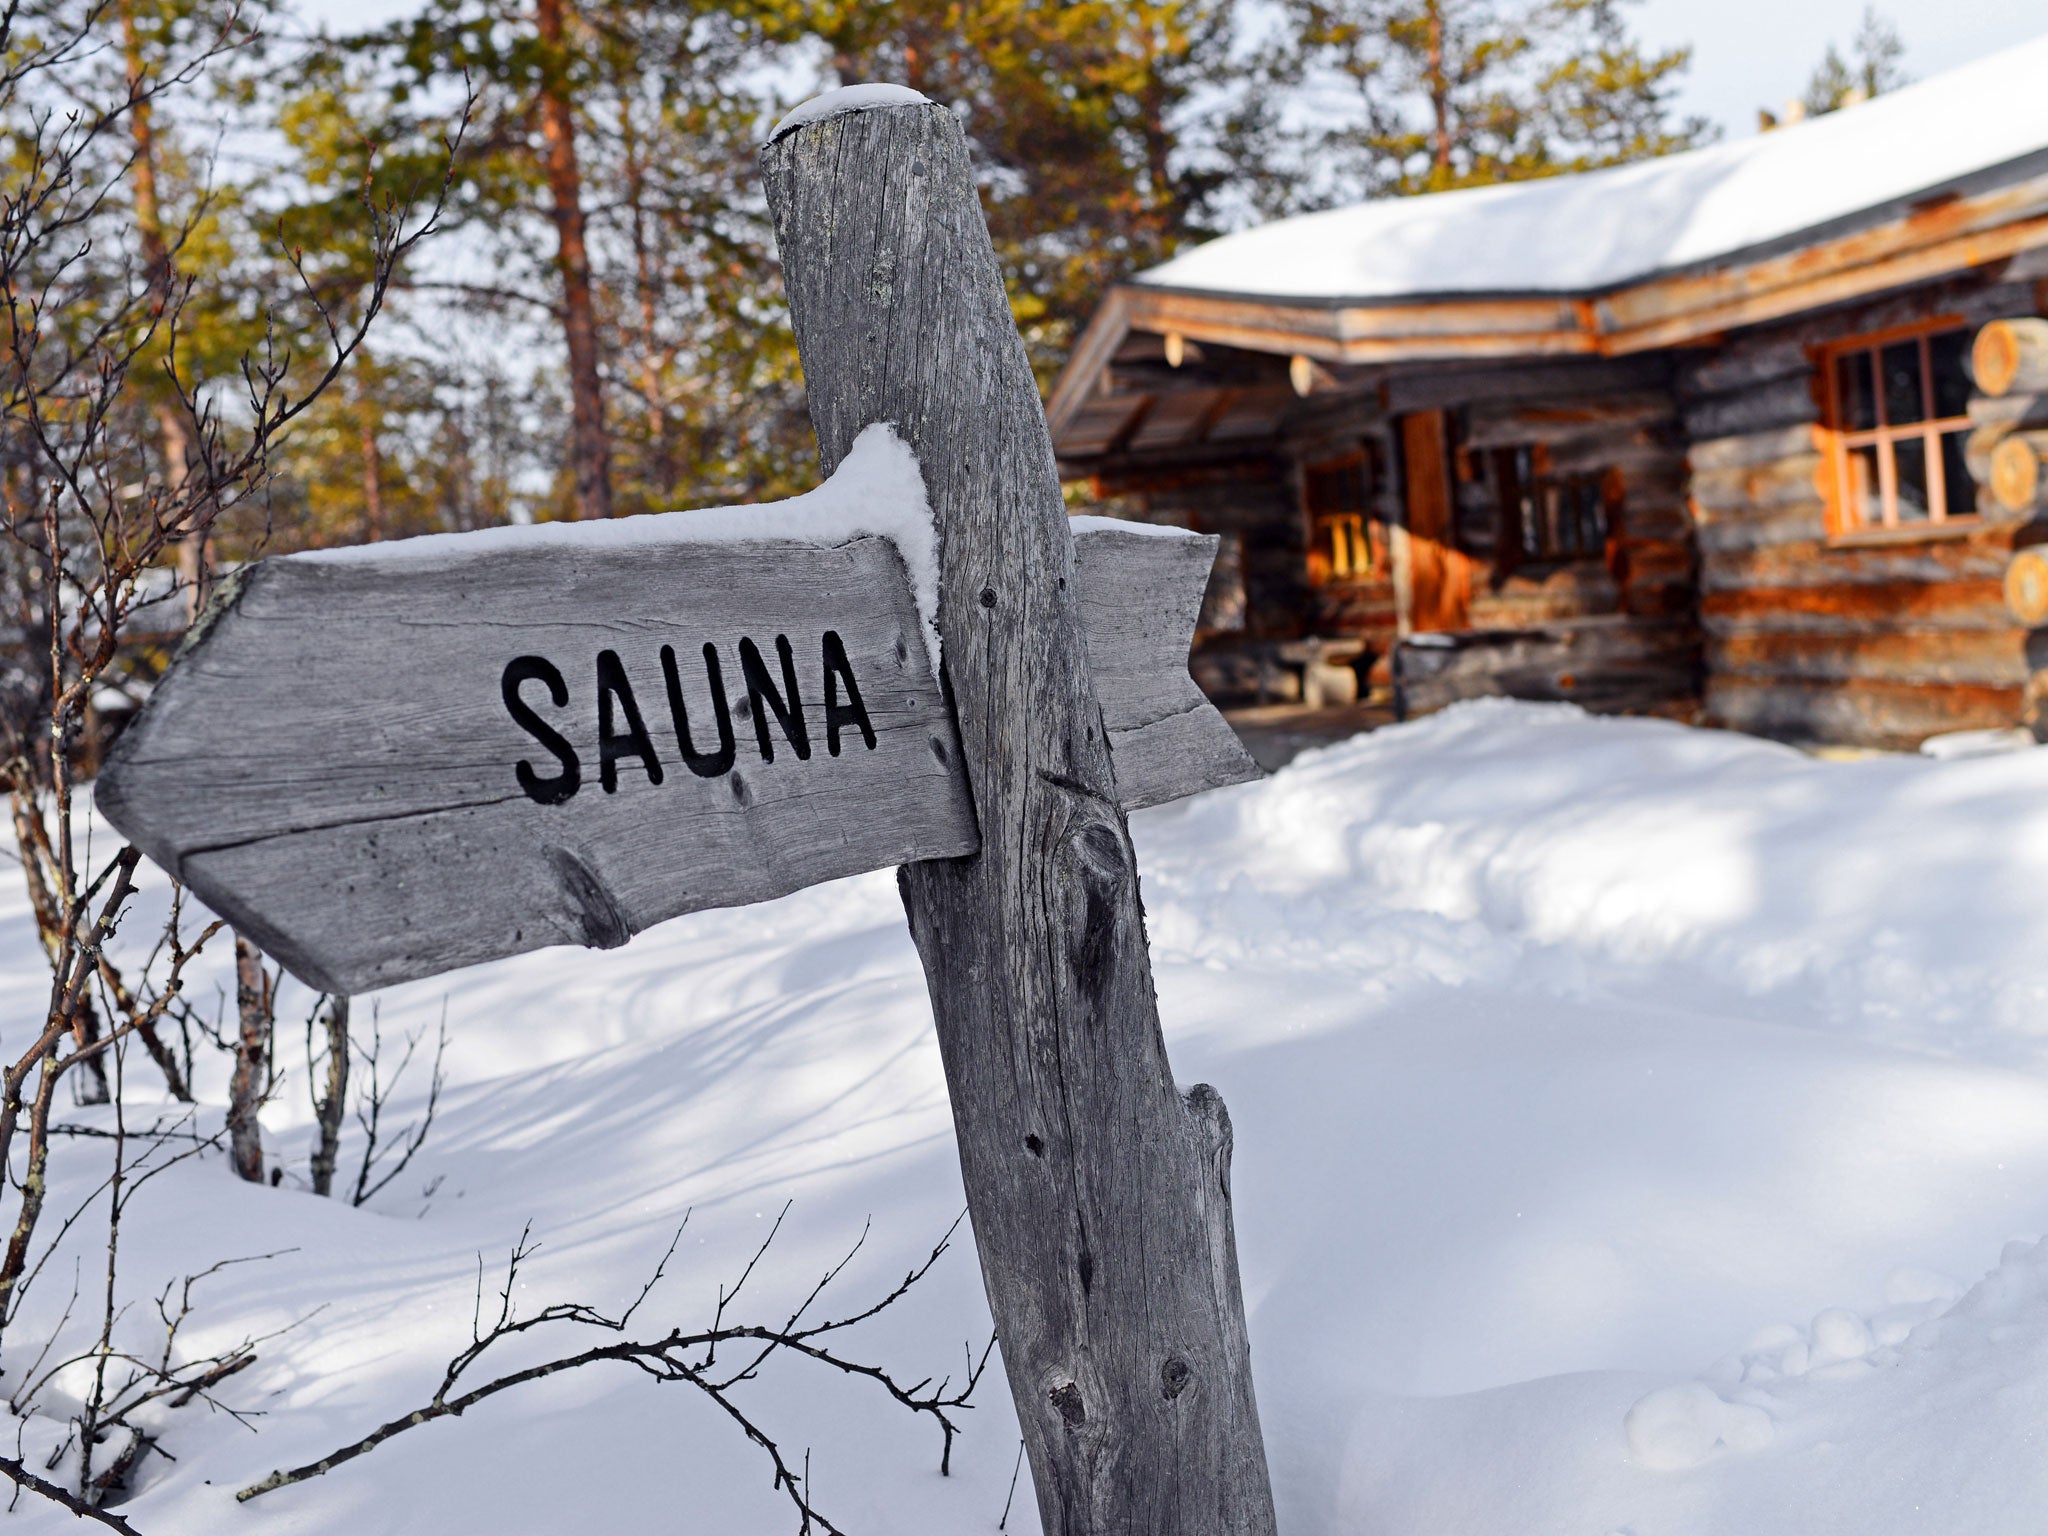 Saunas are an institution in Finland